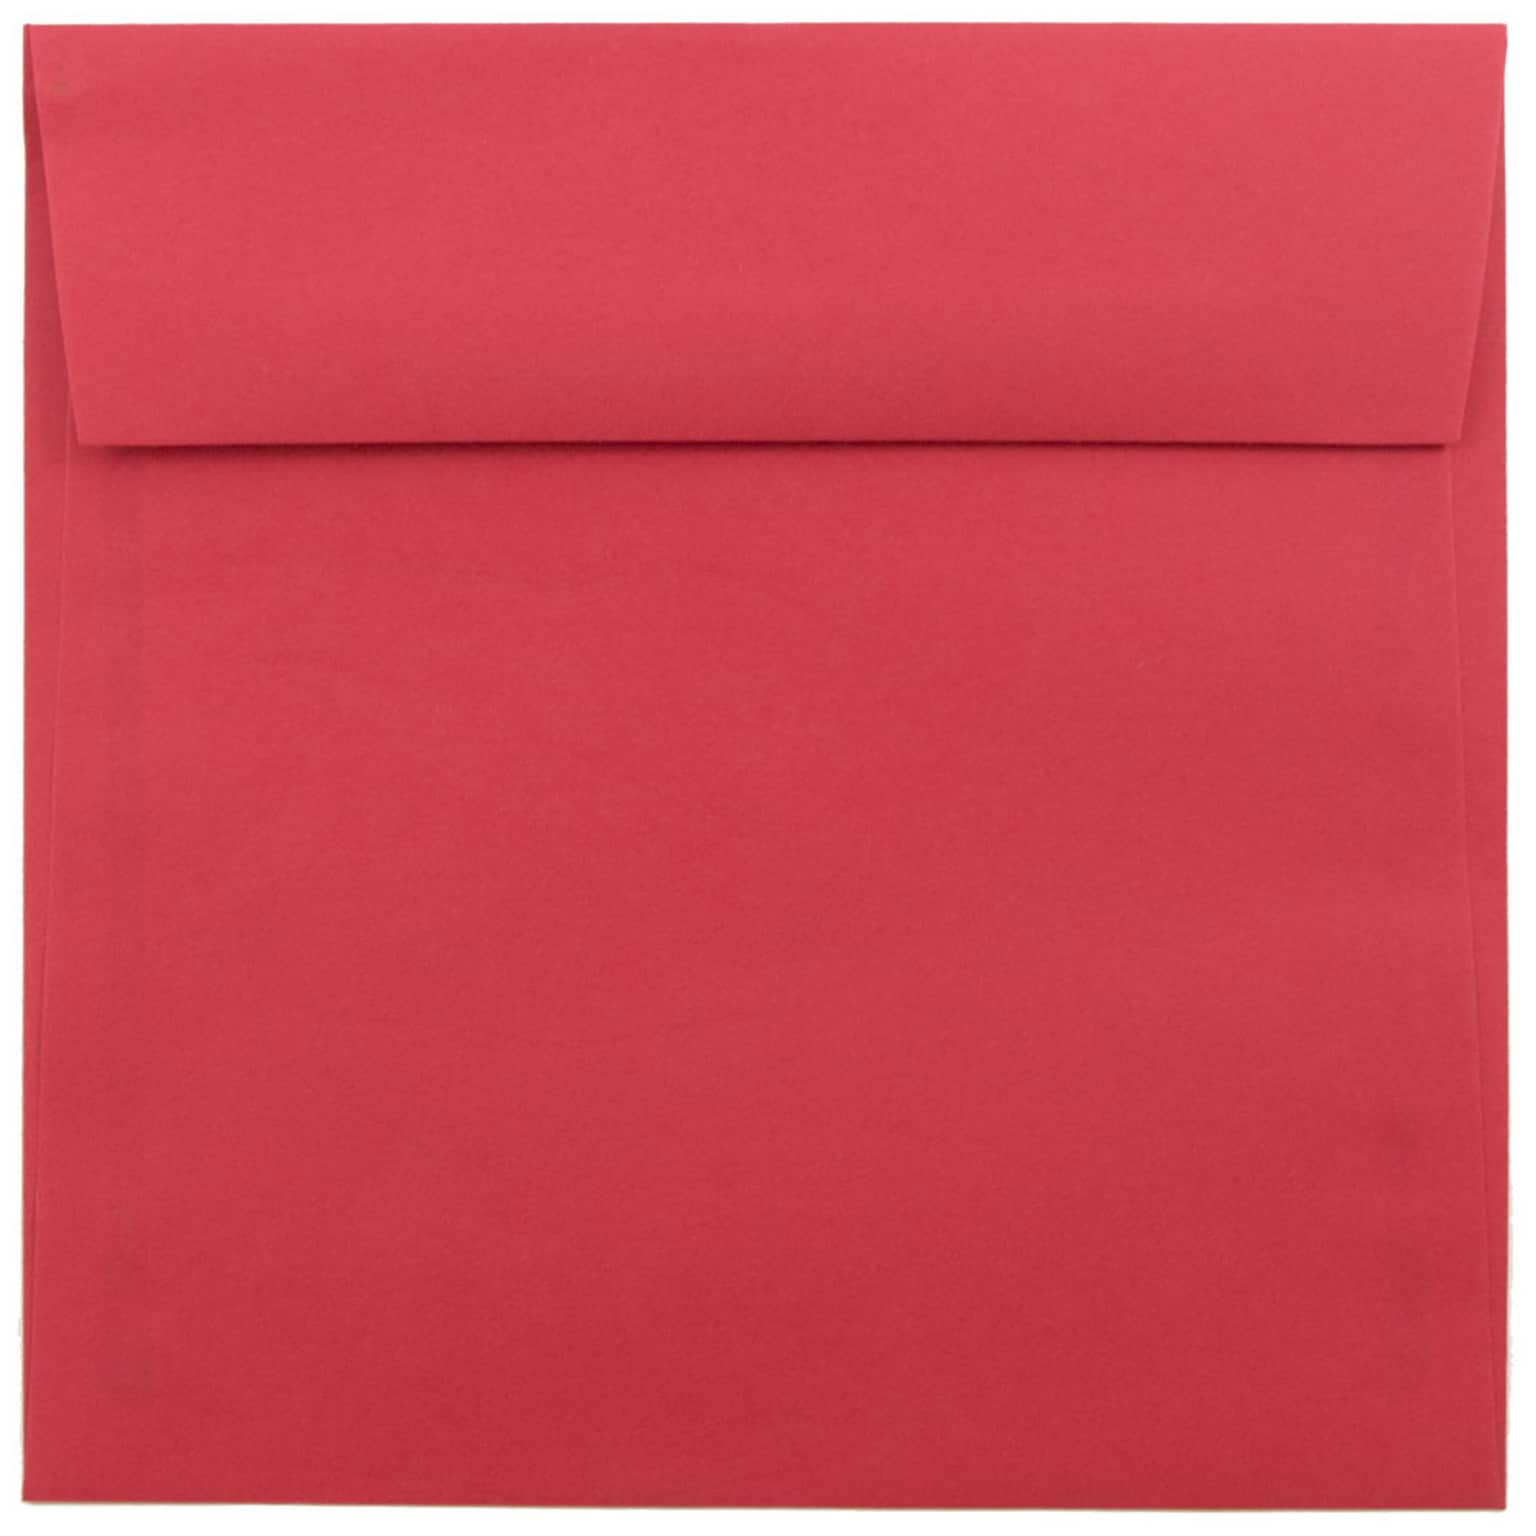 JAM Paper Booklet Envelope, 6 1/2 x 6 1/2, Brite Hue Red, 100/Carton (02792283B)